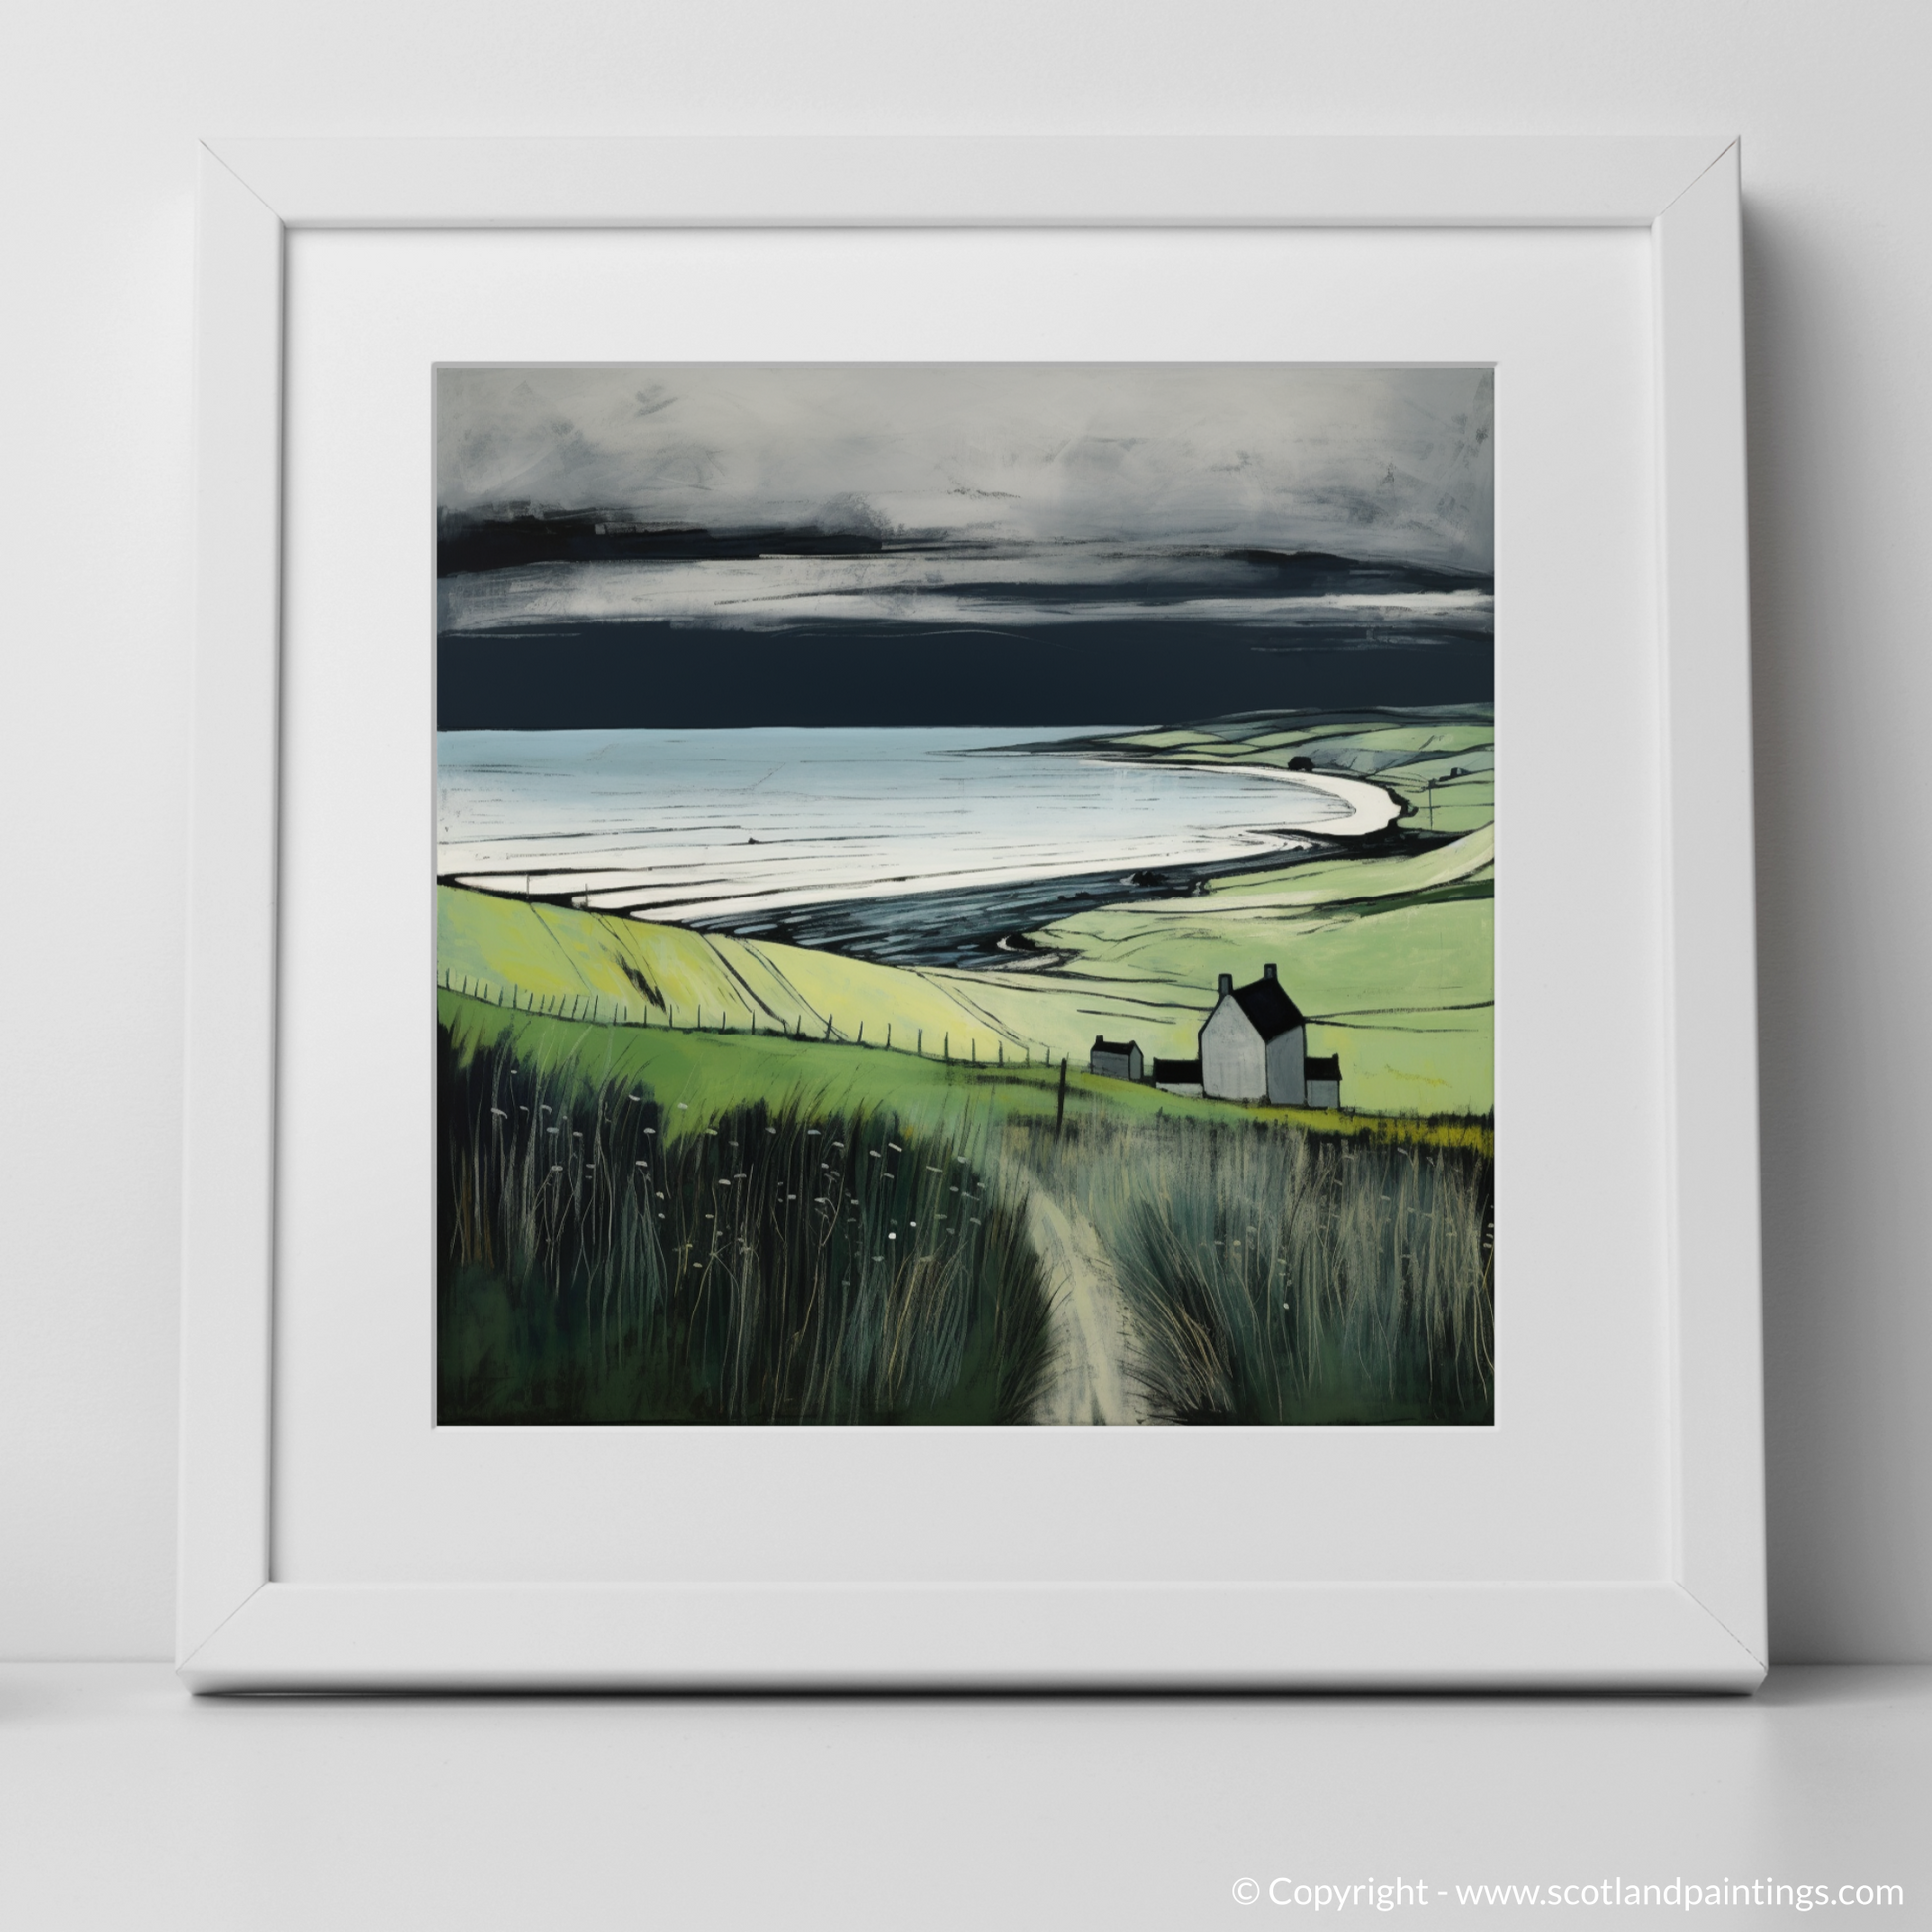 Art Print of Lunan Bay, Angus with a white frame